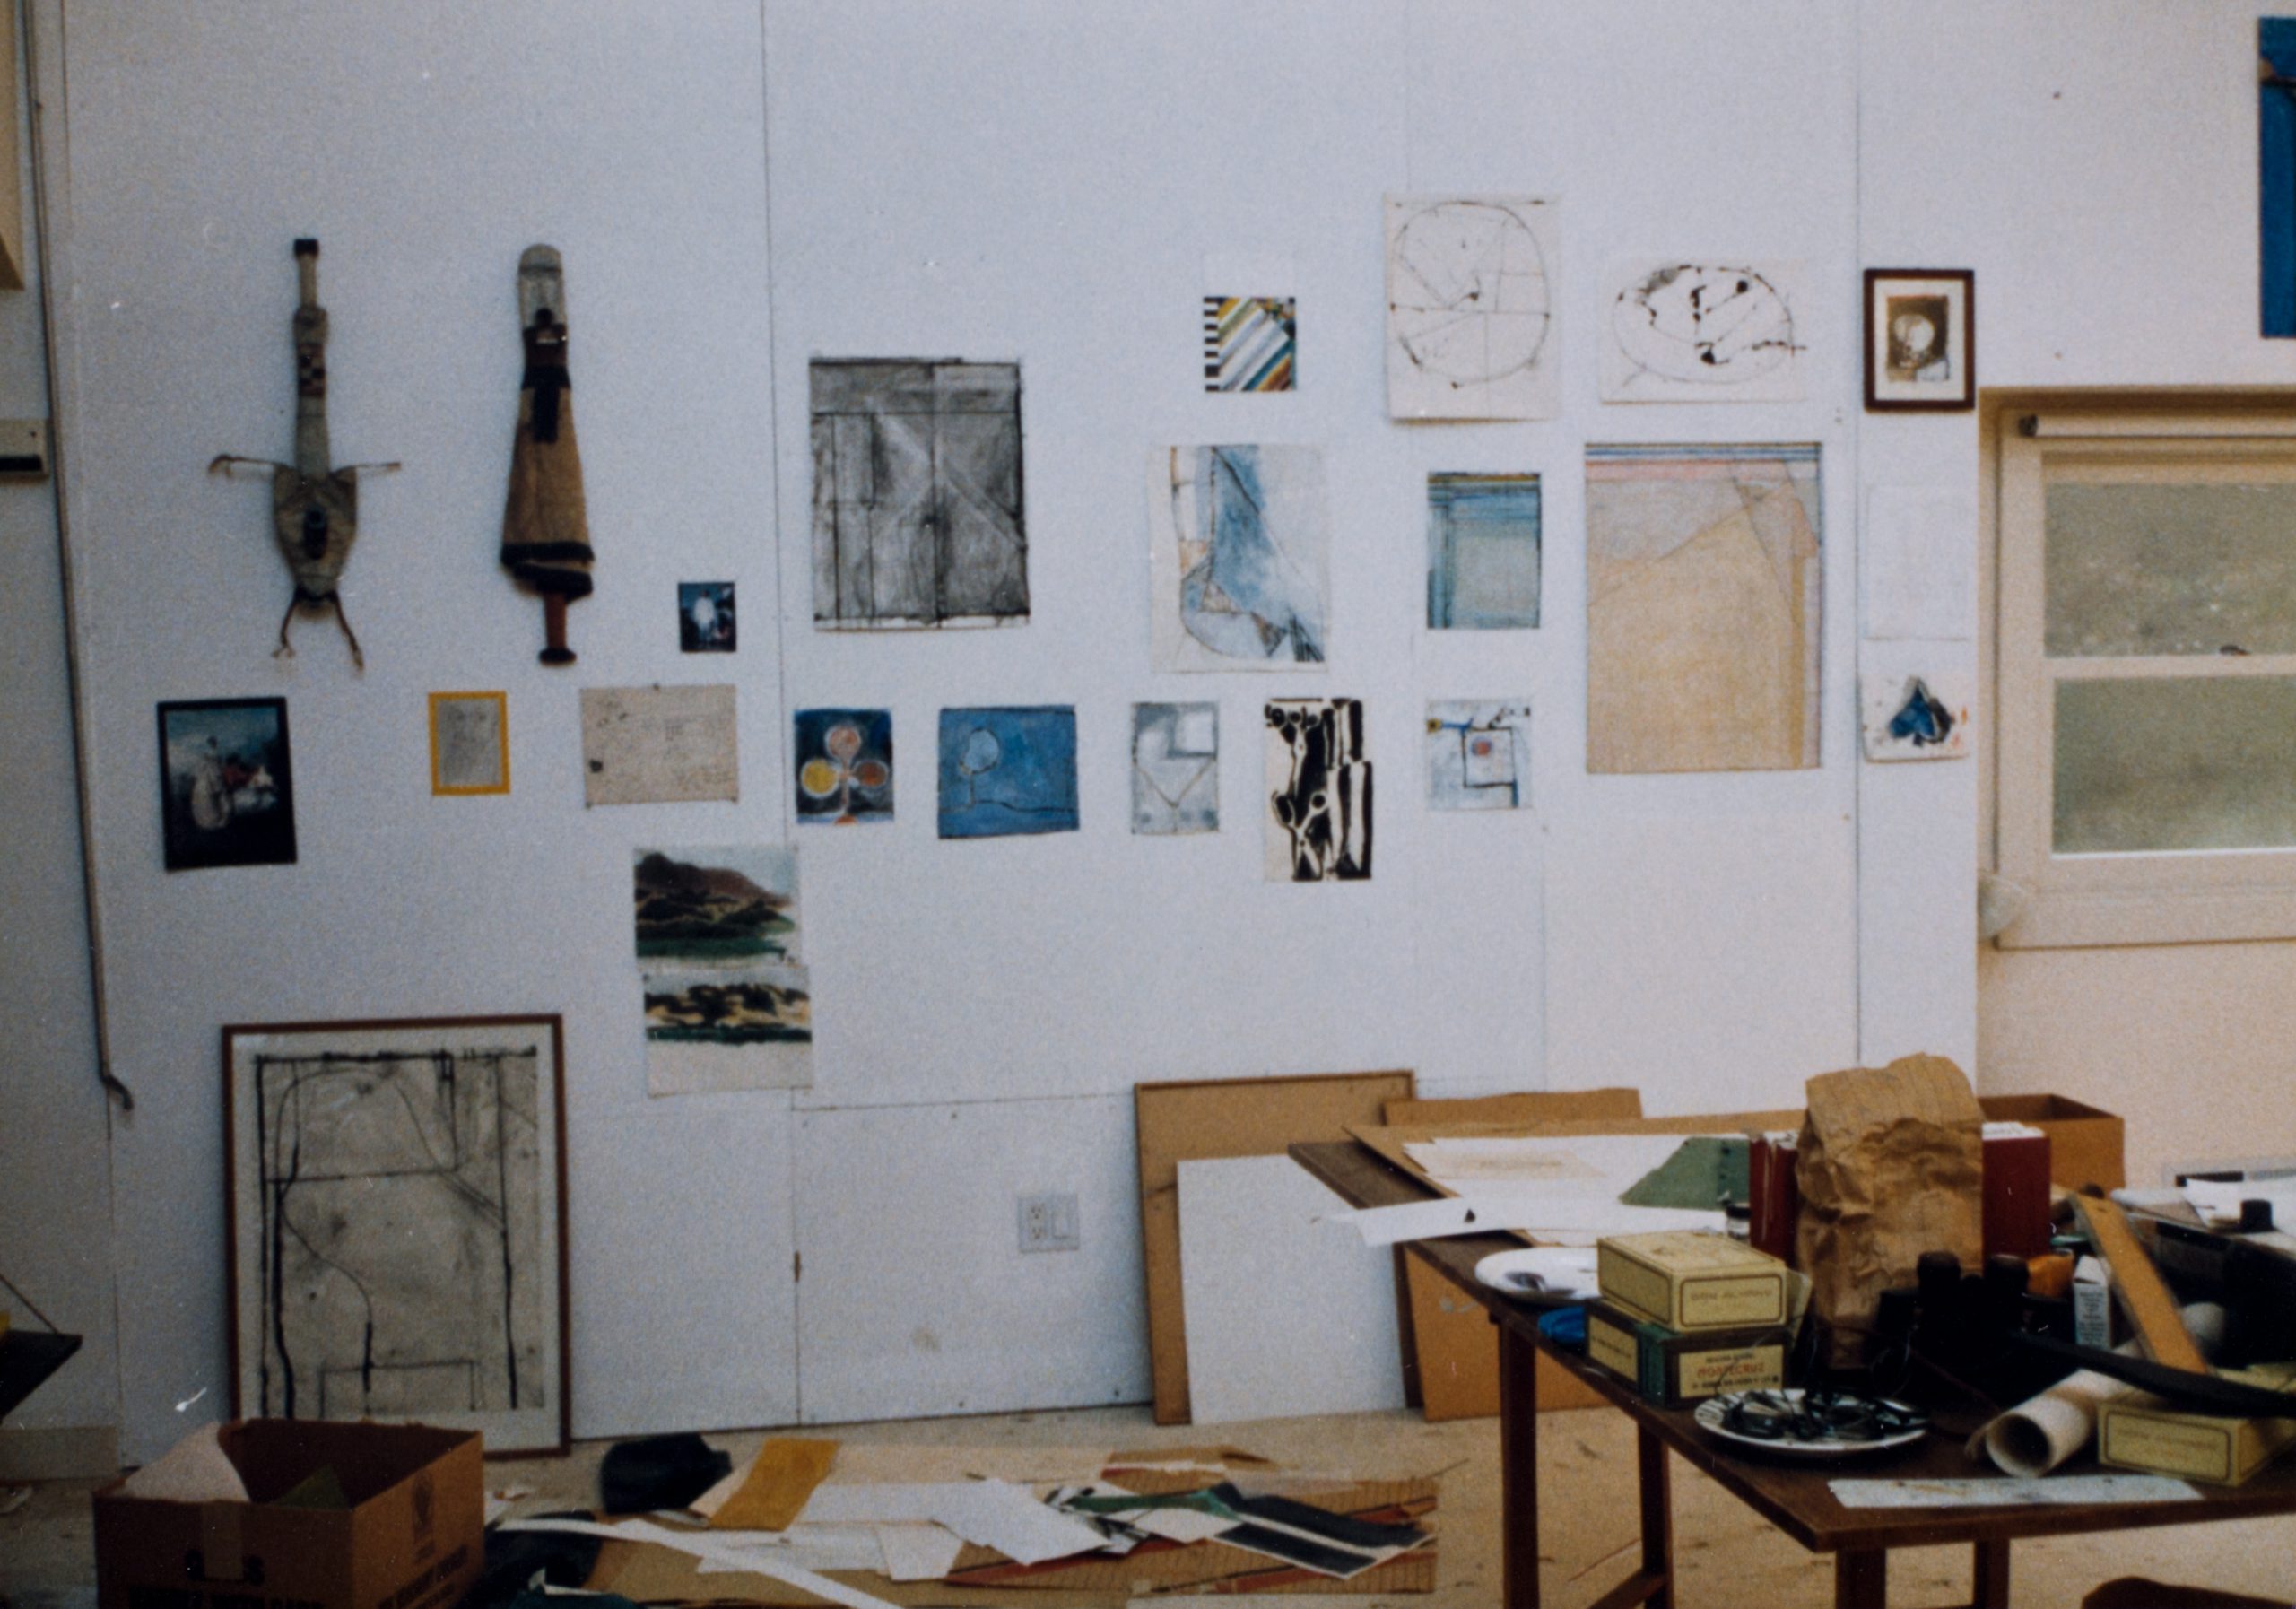 Healdsburg studio, photograph by Kathie Longinotti, 1993. Courtesy of the Richard Diebenkorn Foundation Archives.